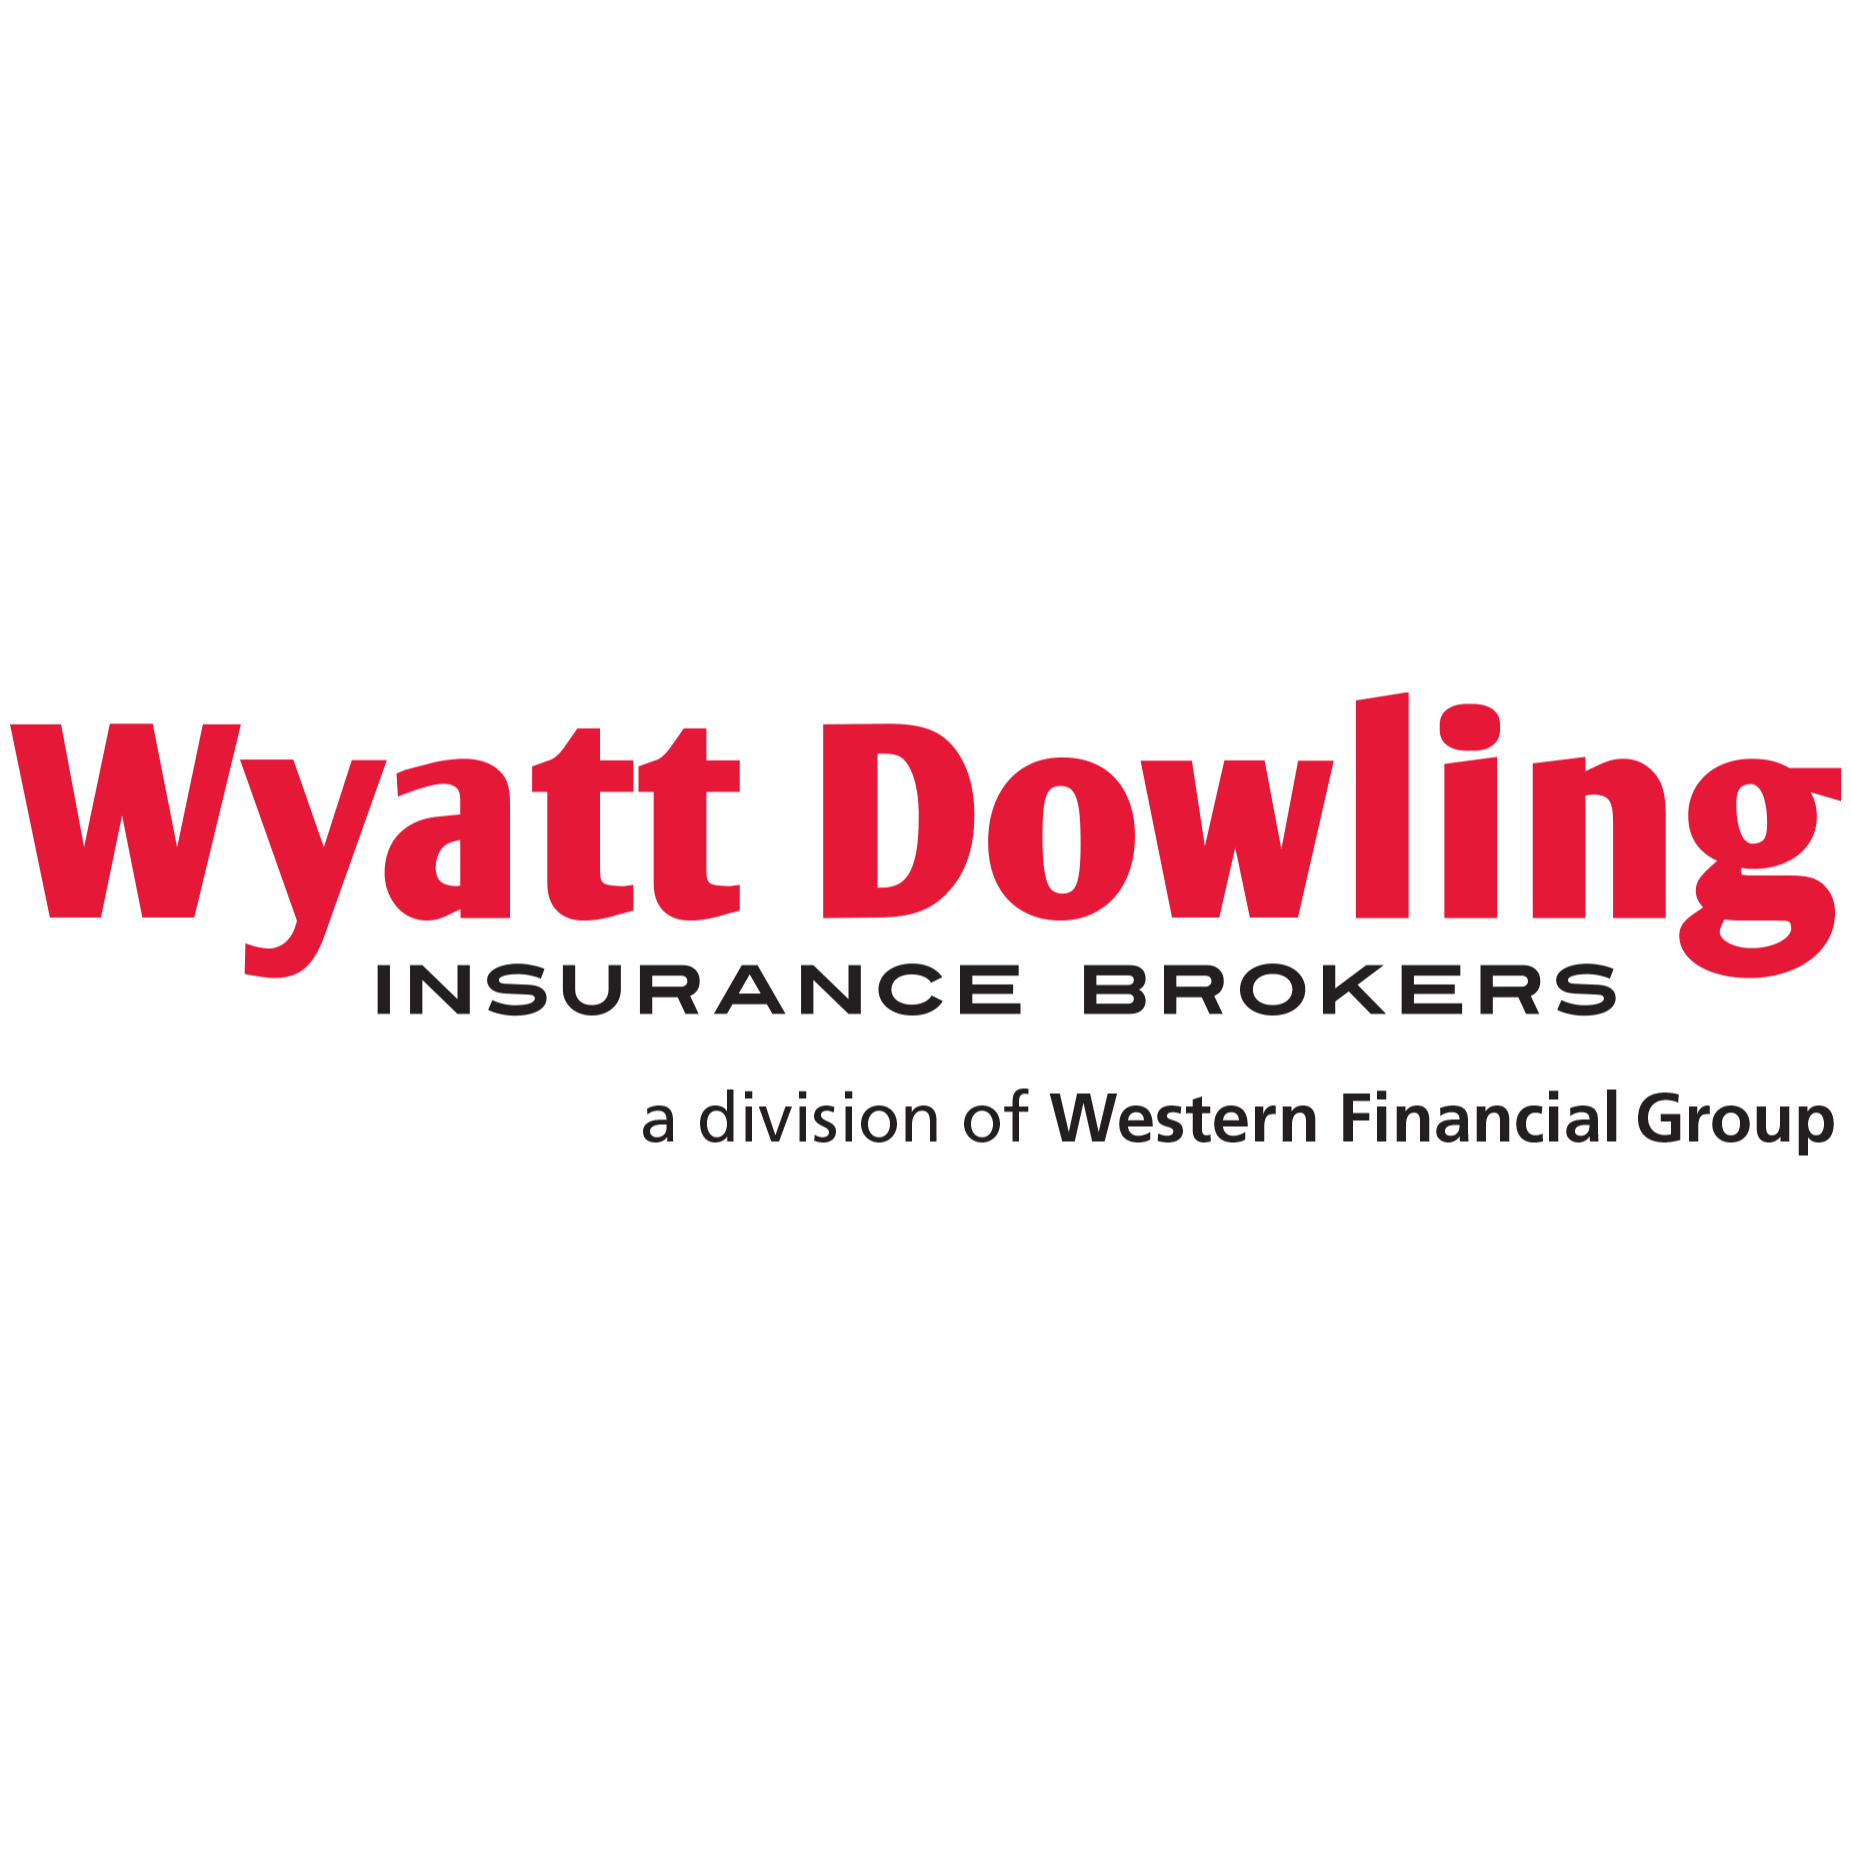 Wyatt Dowling Insurance Brokers Winnipeg (204)940-6555